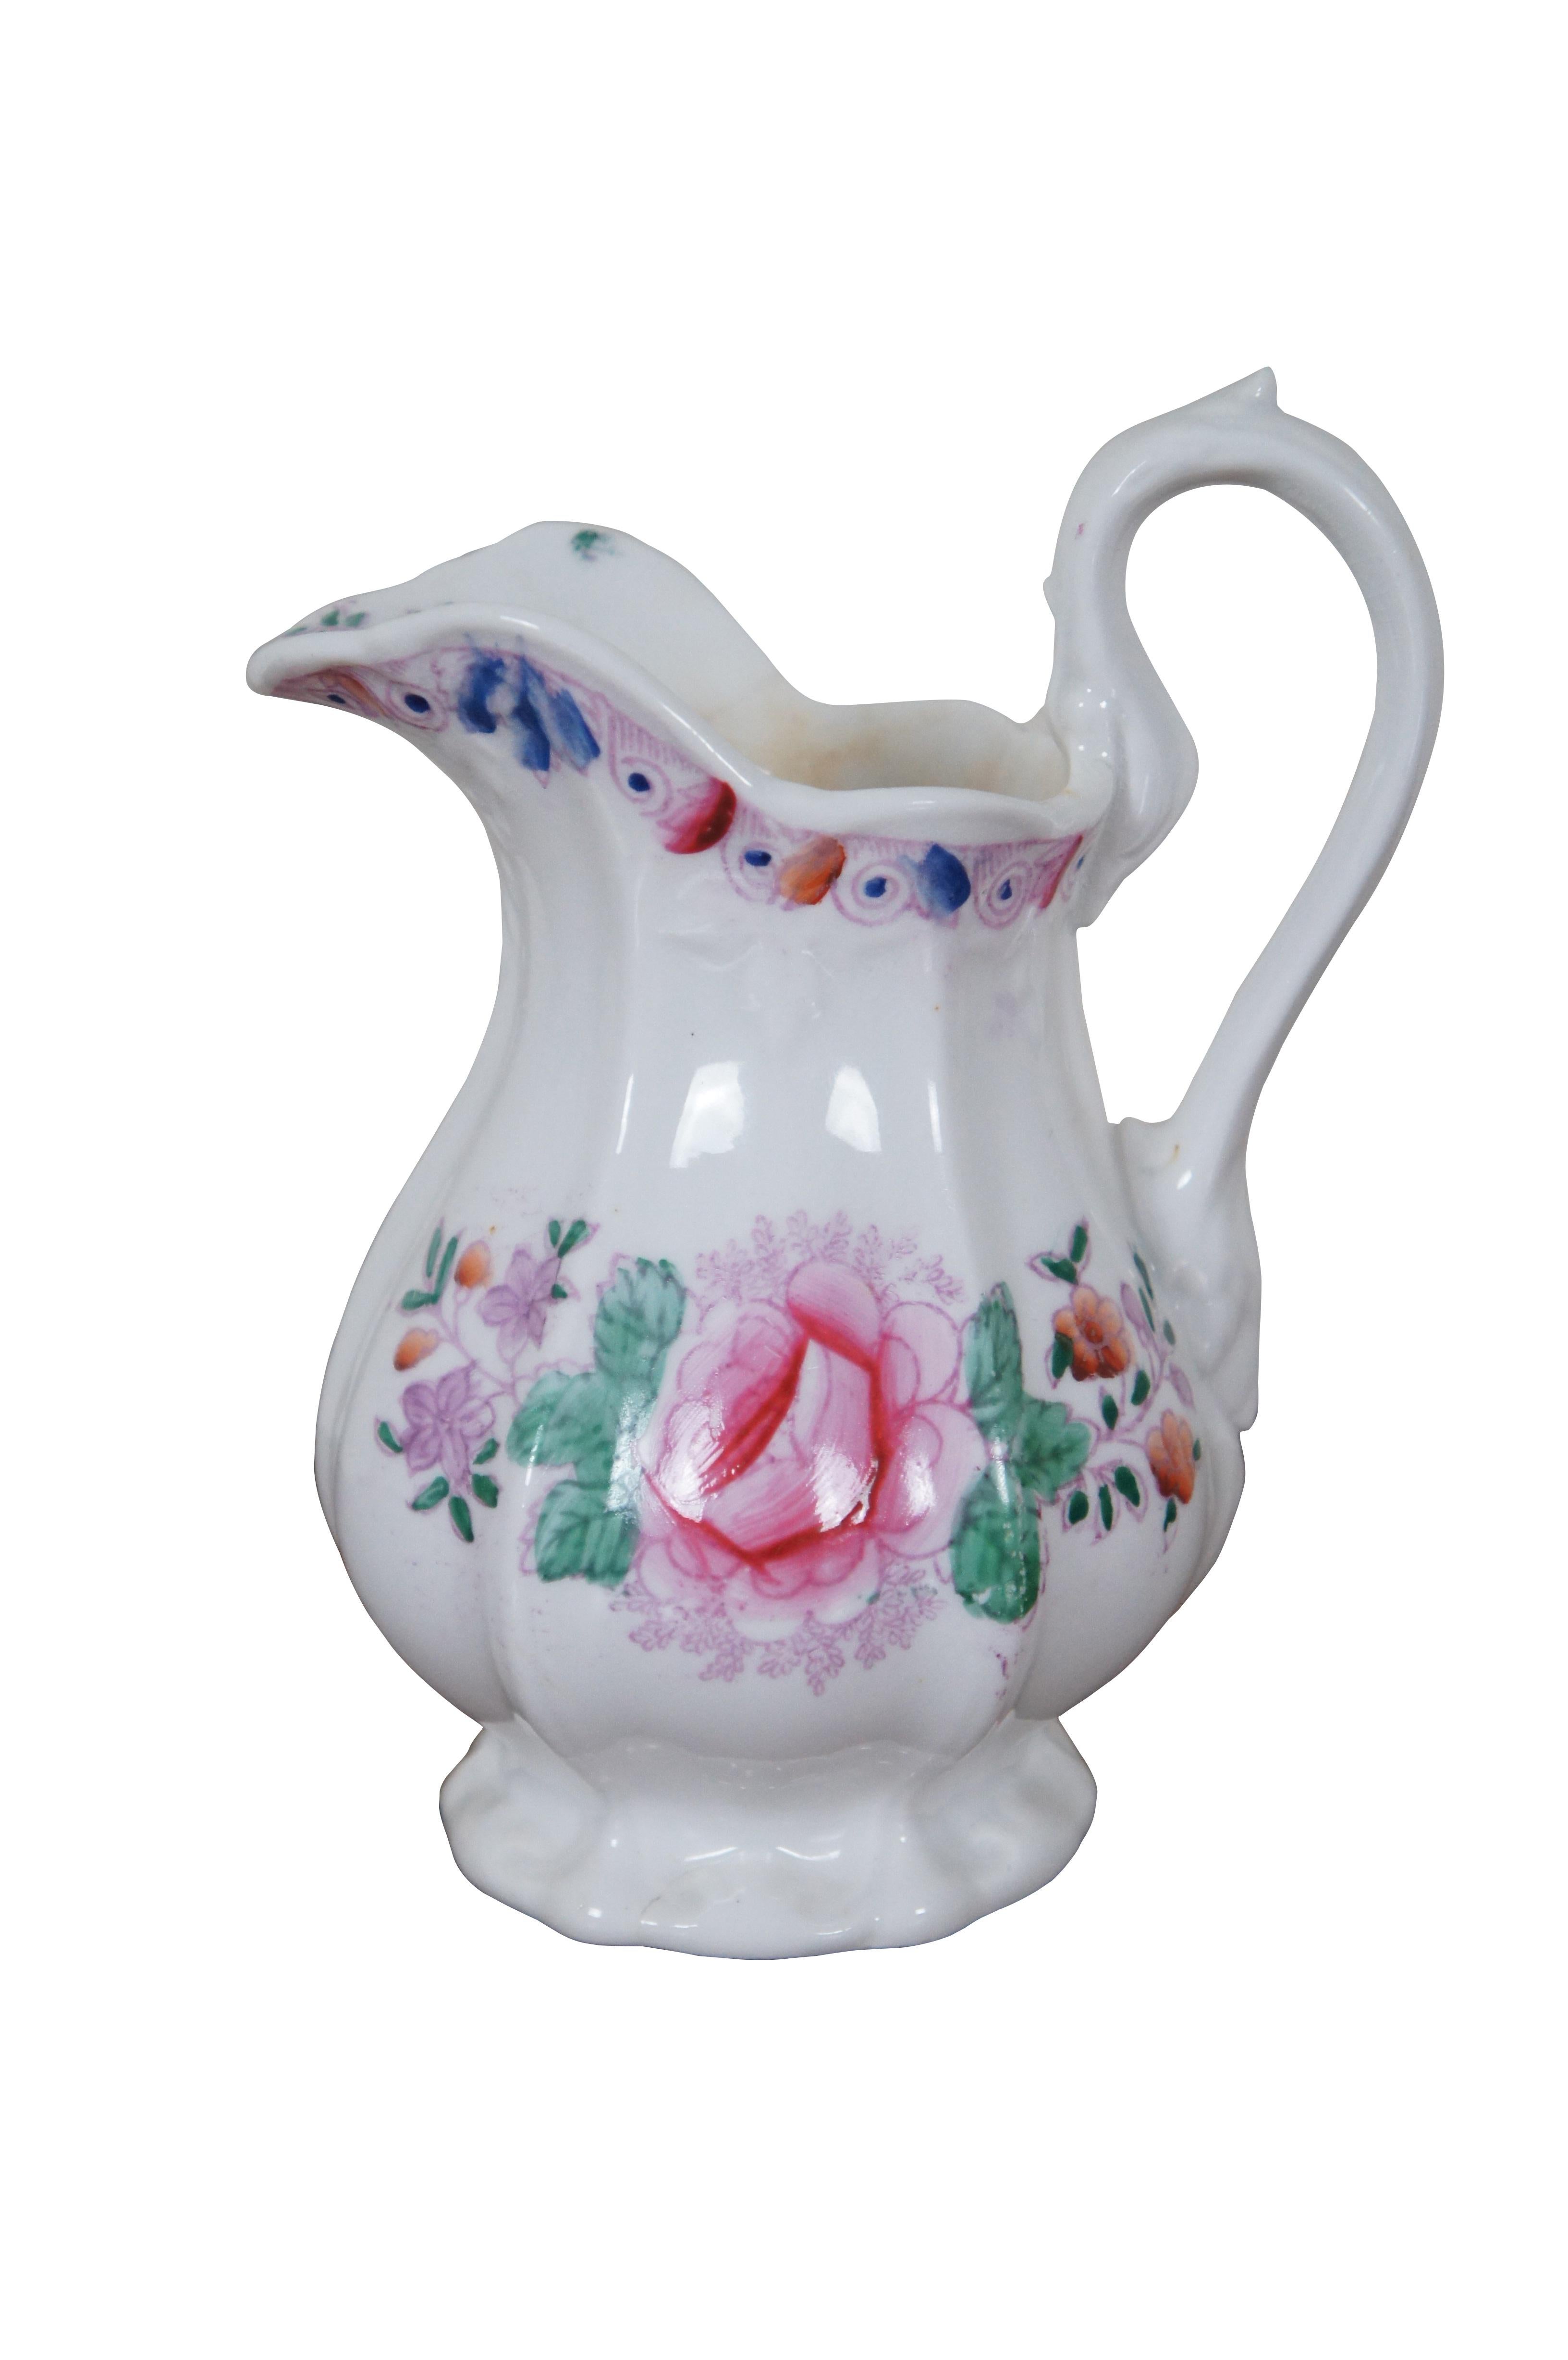 Antique Porcelain Floral Bird Tea Coffee Creamer Pitcher & Cup

DIMENSIONS
Pitcher - 5” x 4” x 6.25” / Cup - 3.25” x 2.75” (Width x Depth x Height)